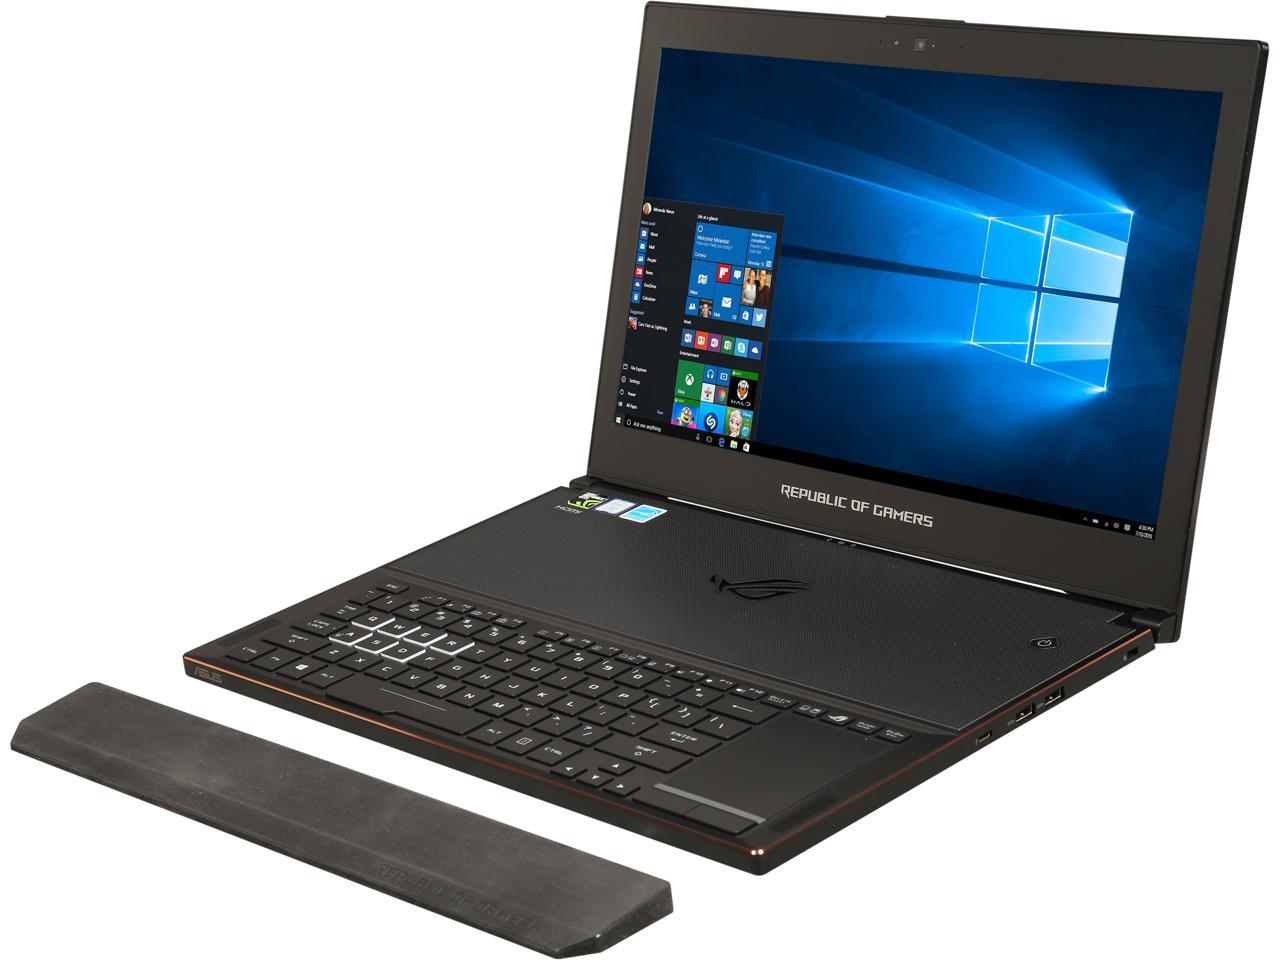 Refurbished ASUS GX501VI-US74 15.6" i7-7700HQ (2.80 GHz) GTX 1080 16GB Ram 512GB SSD Win 10 Pro Gaming Laptop